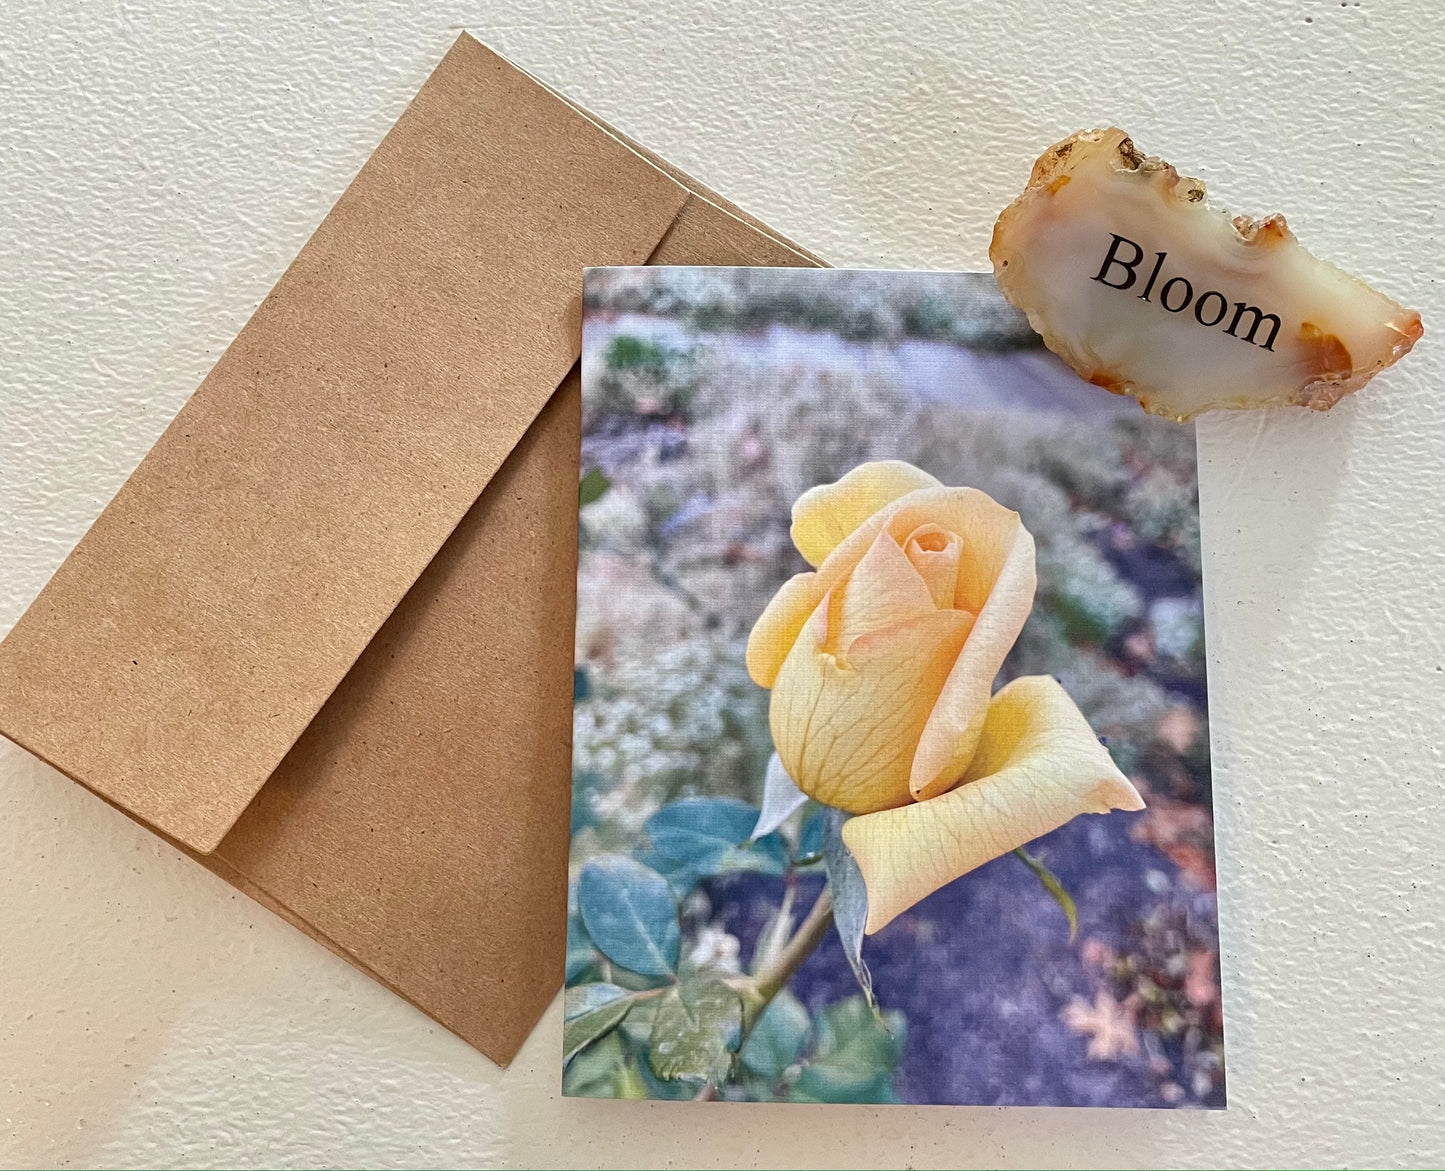 Vintage Winter Yellow Rose Original Photography Greeting Card with Kraft Envelope